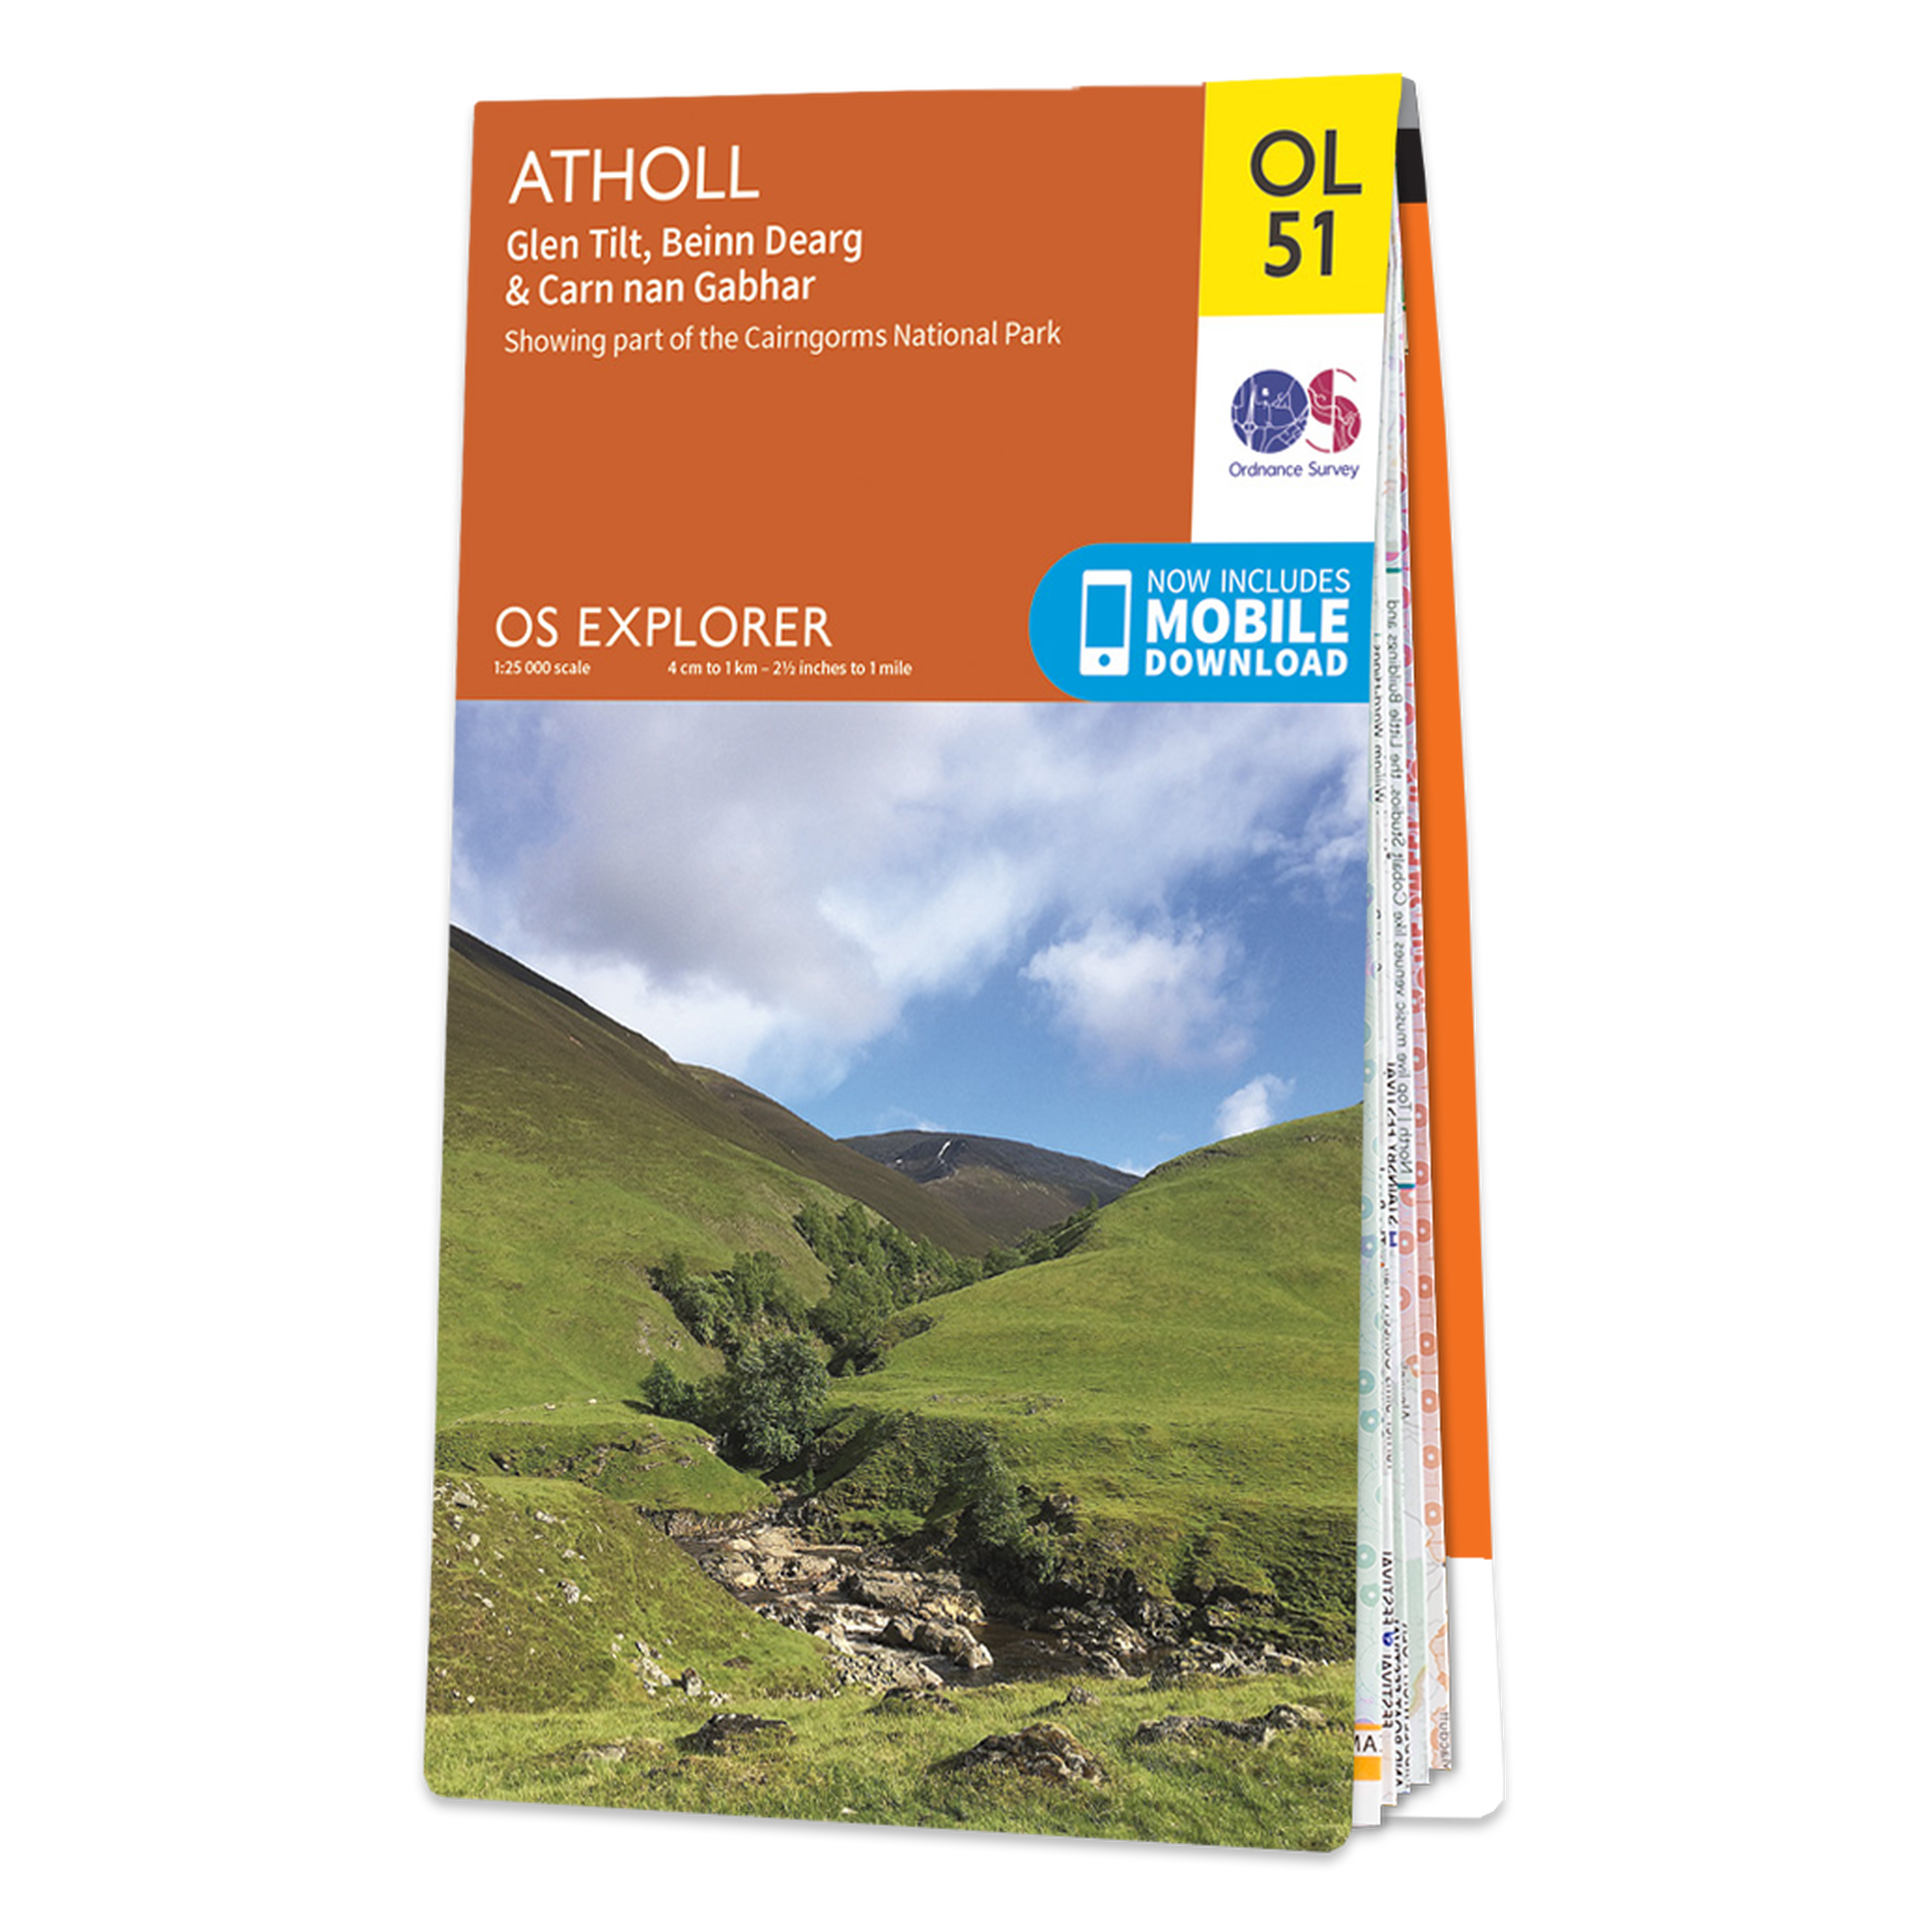 Ordnance Survey OL 51 Atholl, Glen Tilt, Beinn Dearg & Carn nan Gabhar Explorer 1:25k